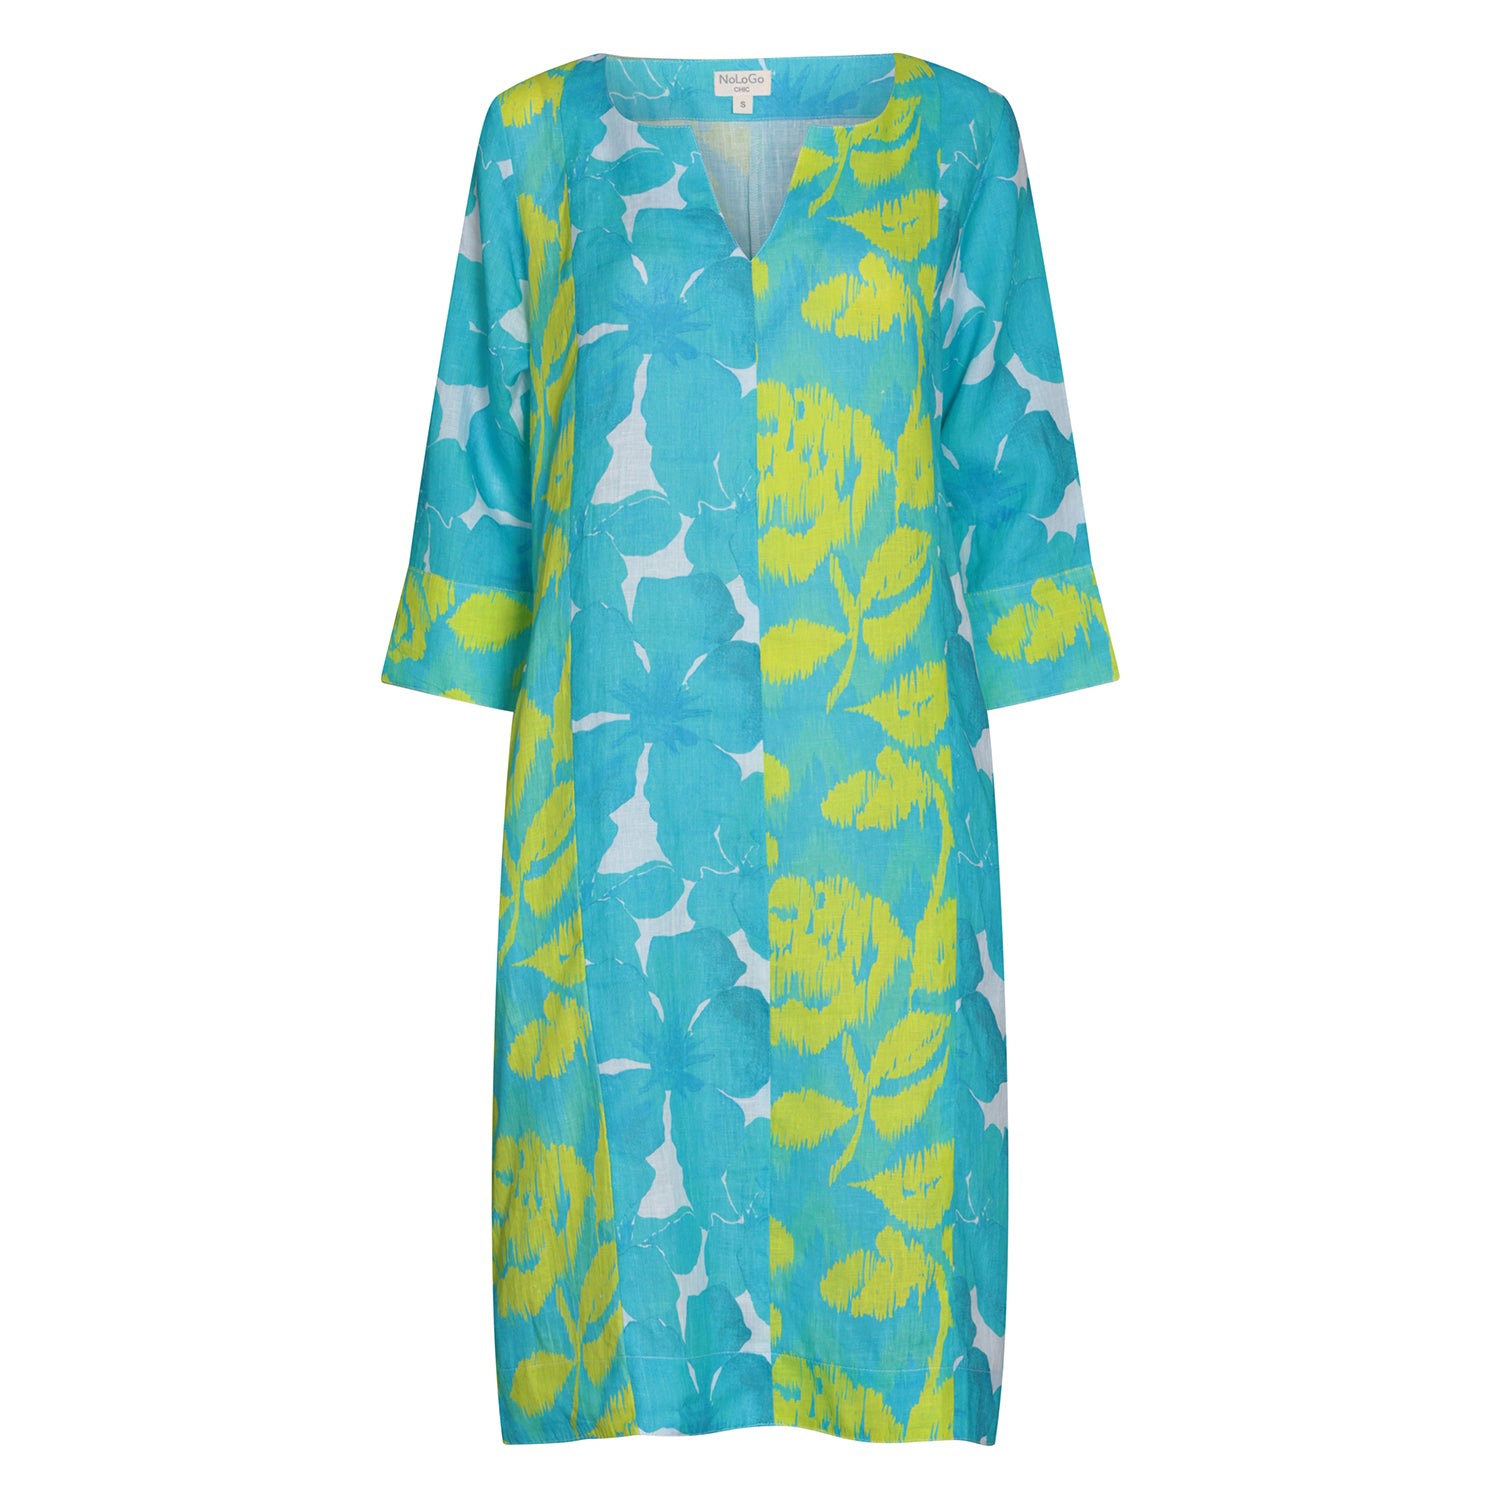 Women’s Zen Oleander Ikat Panel Print Dress - Blue Small Nologo-Chic